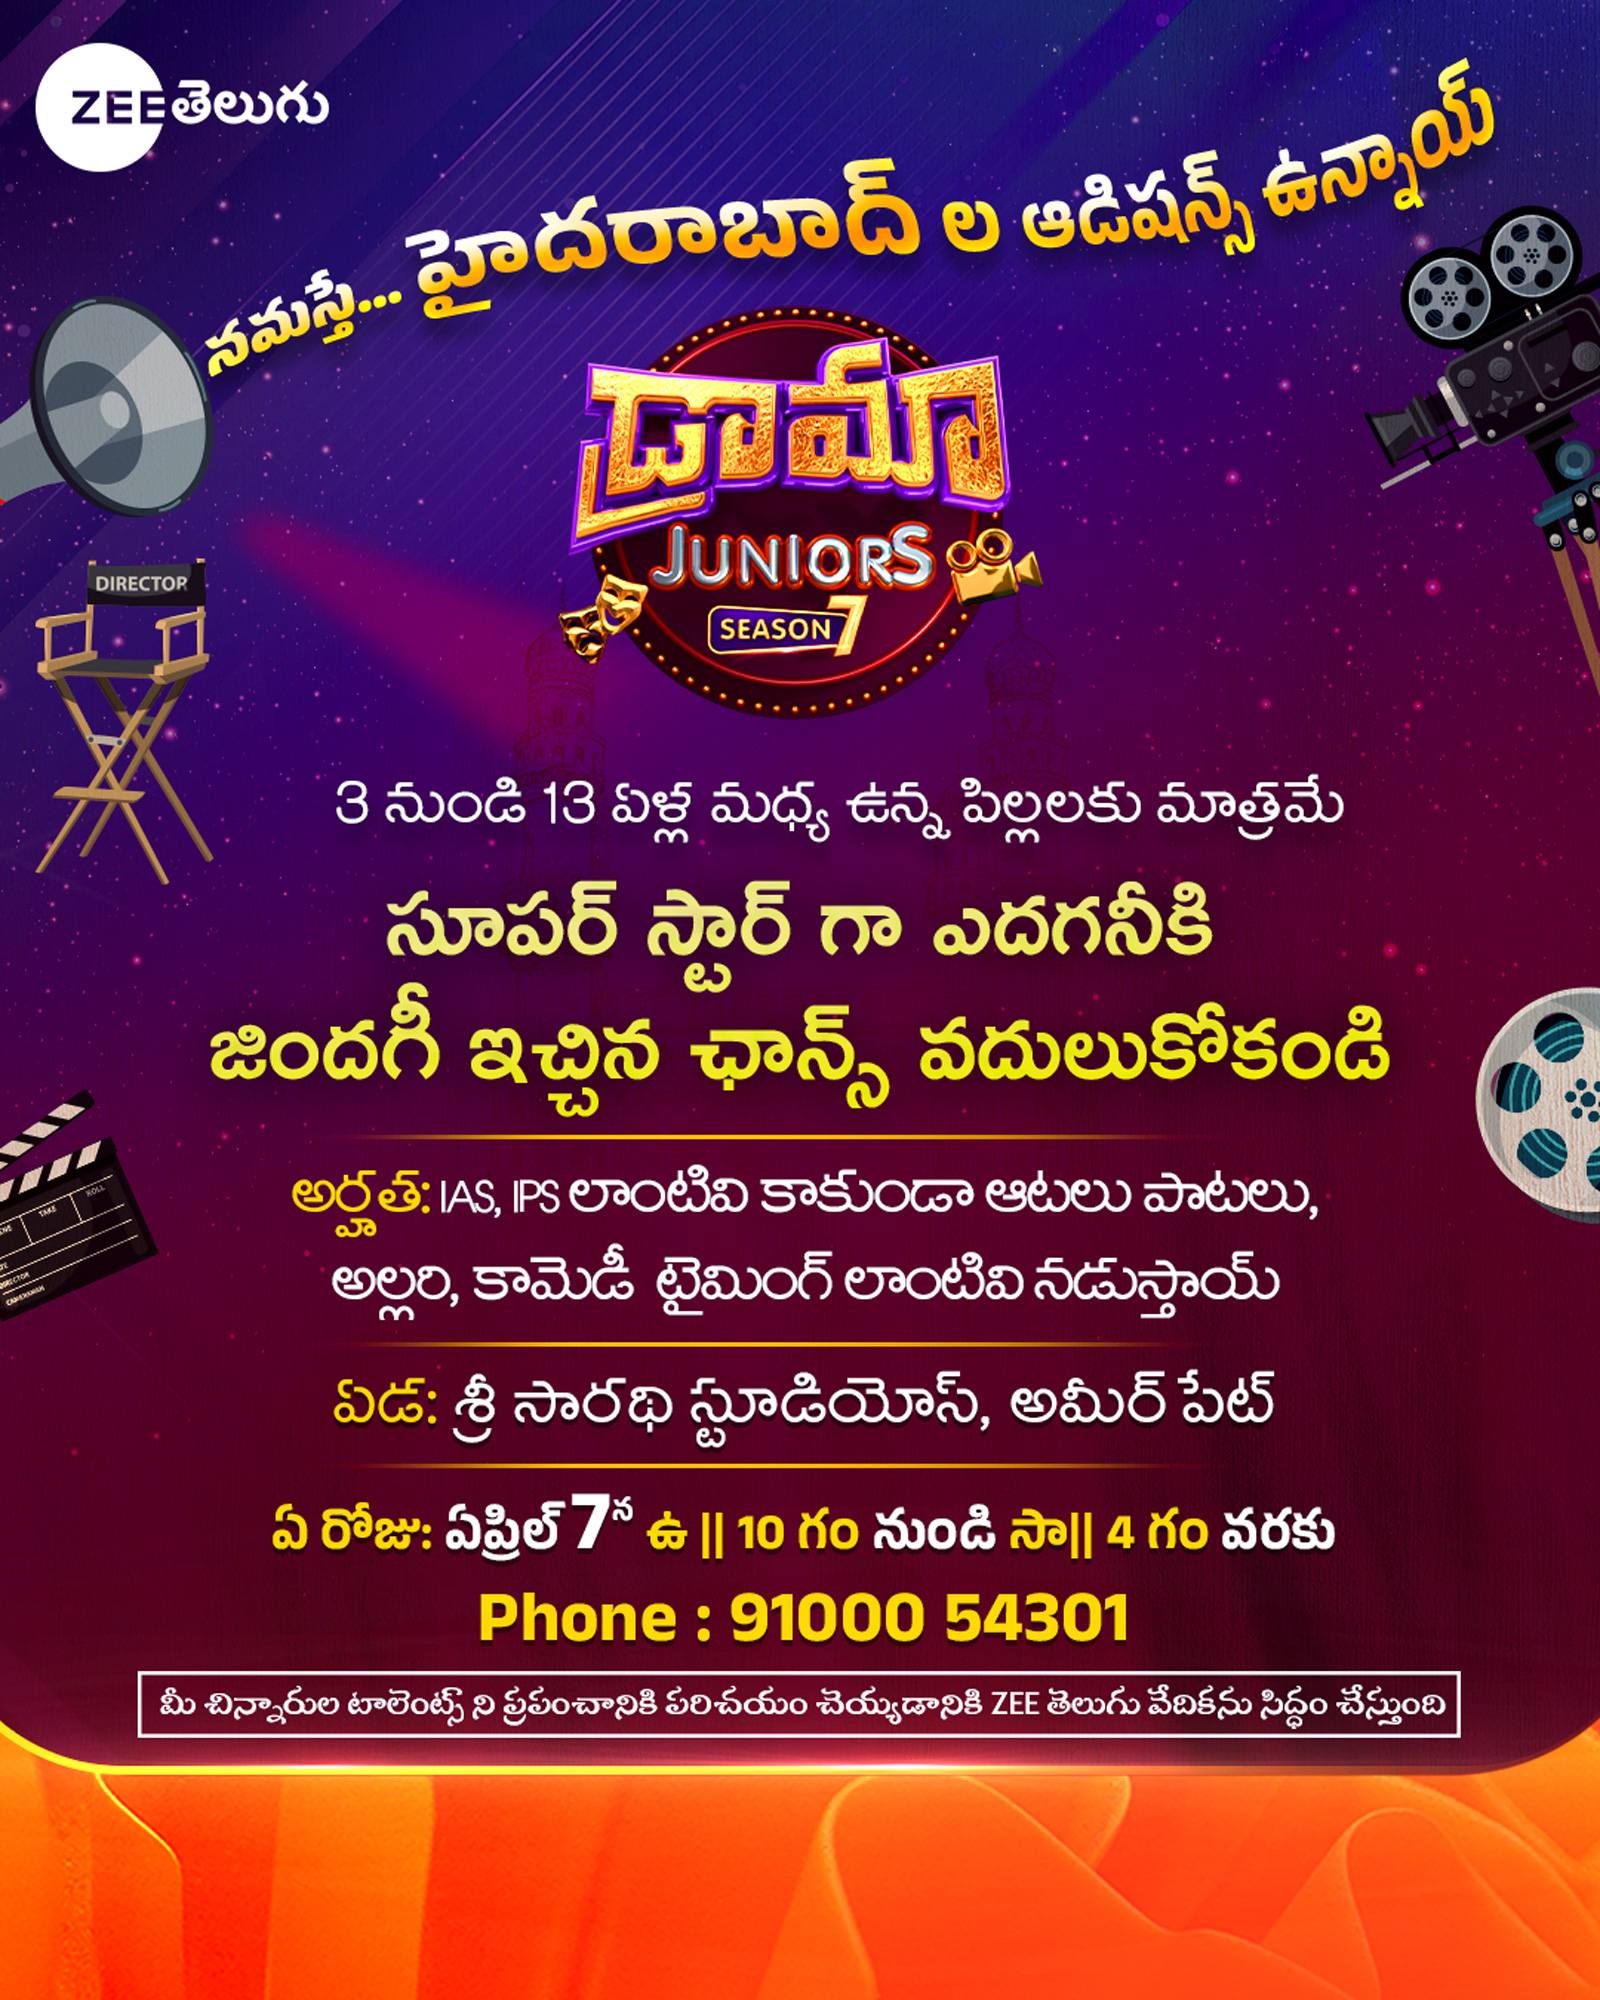 Telugu Drama Juniors Season 7 audition call details